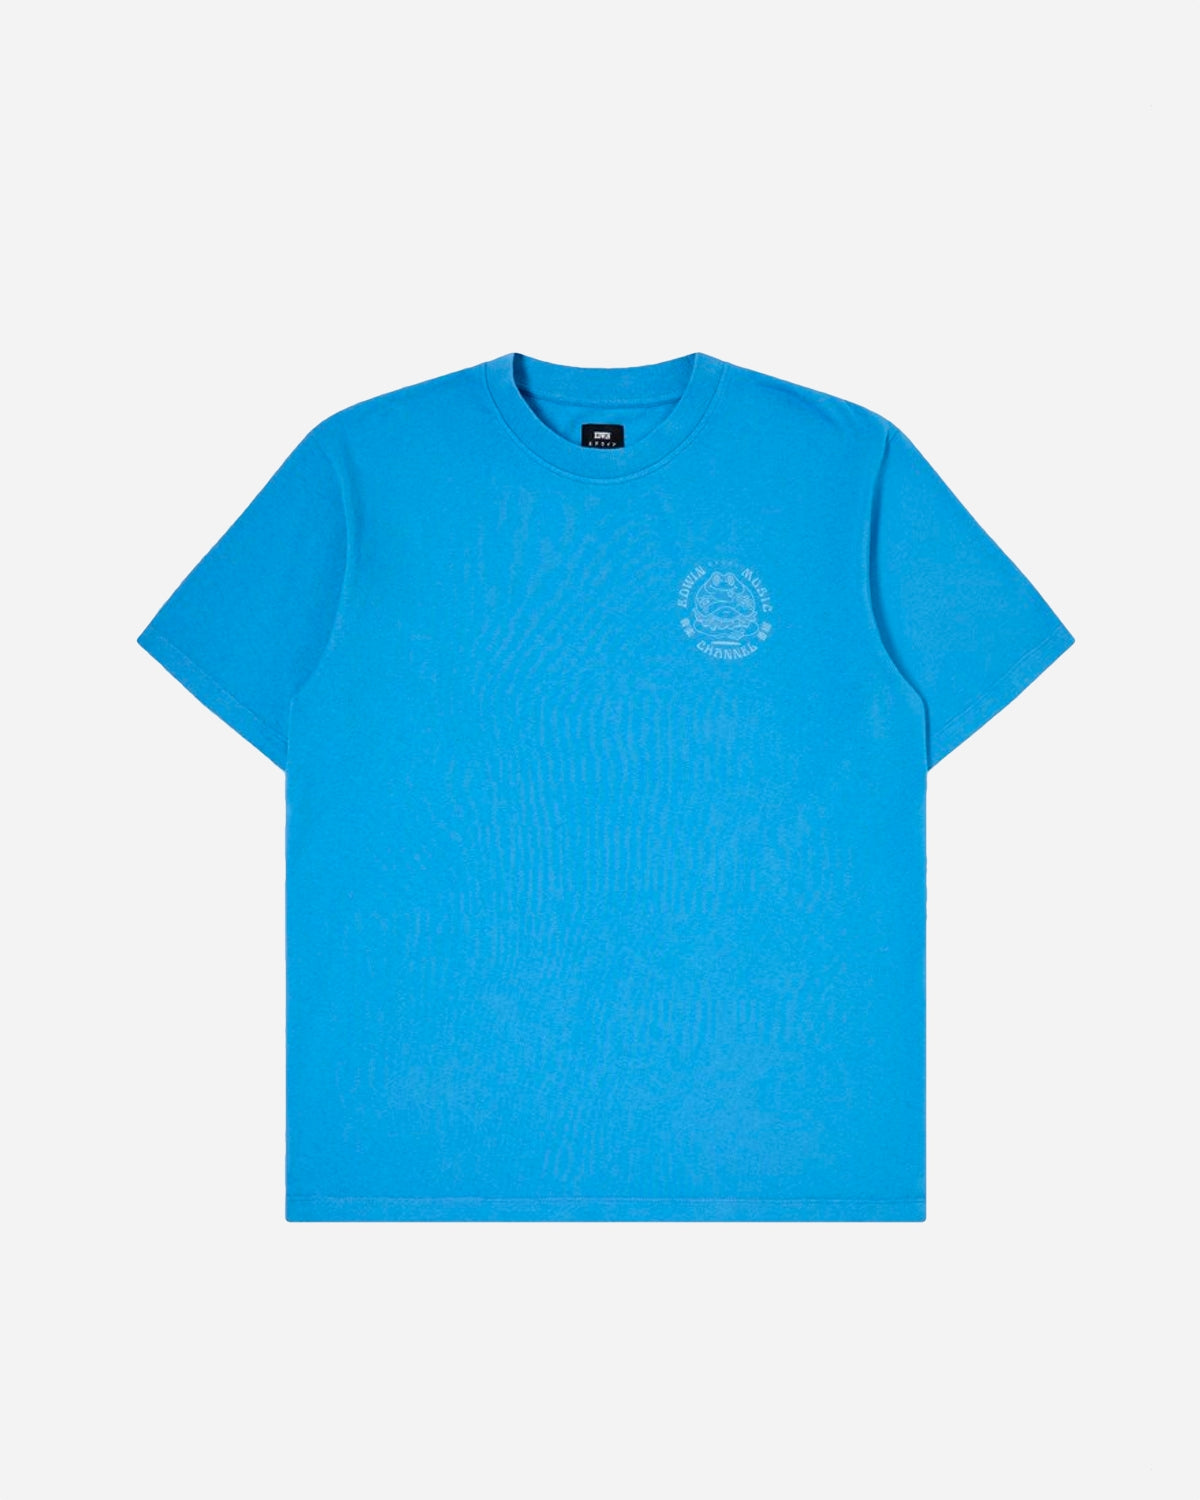 Edwin Music Channel T-Shirt - Parisian Blue